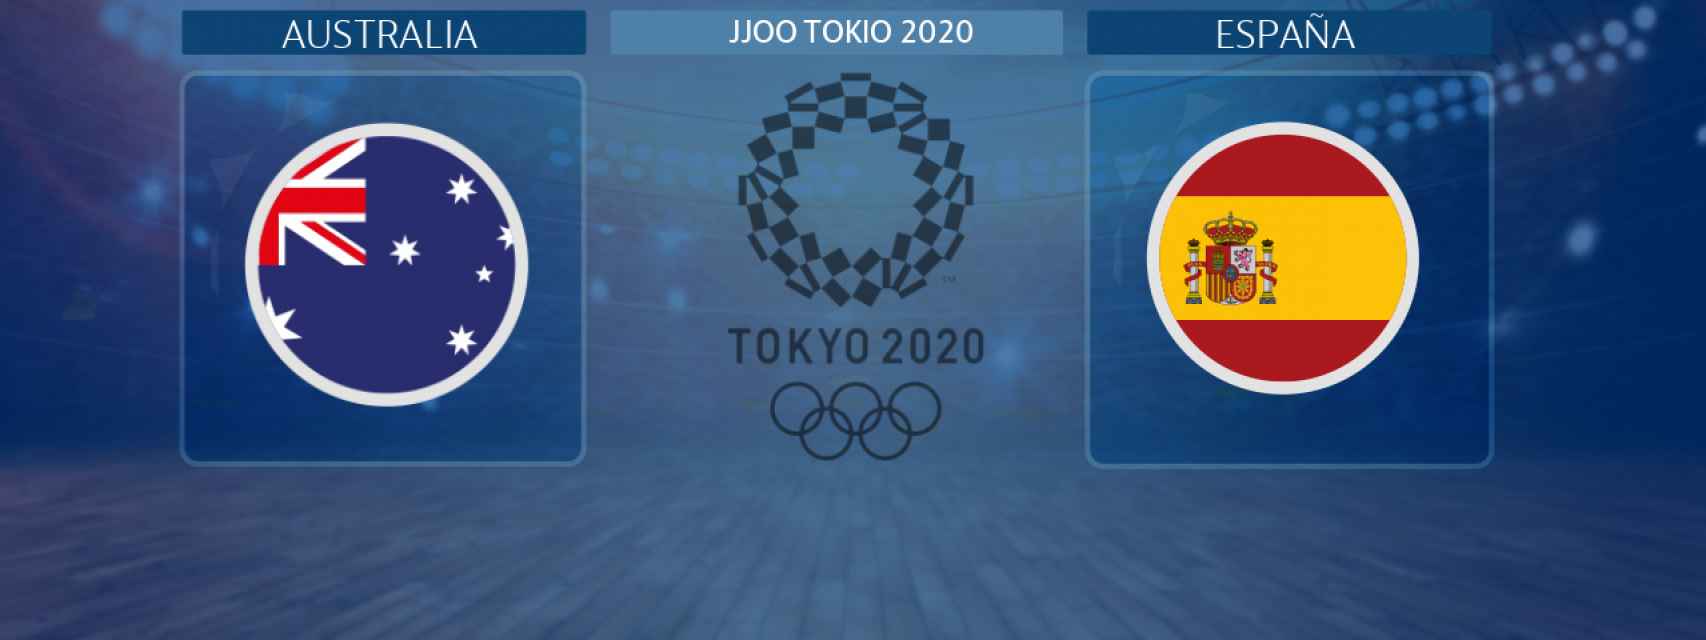 Australia - España, partido de los JJOO de Tokio 2020